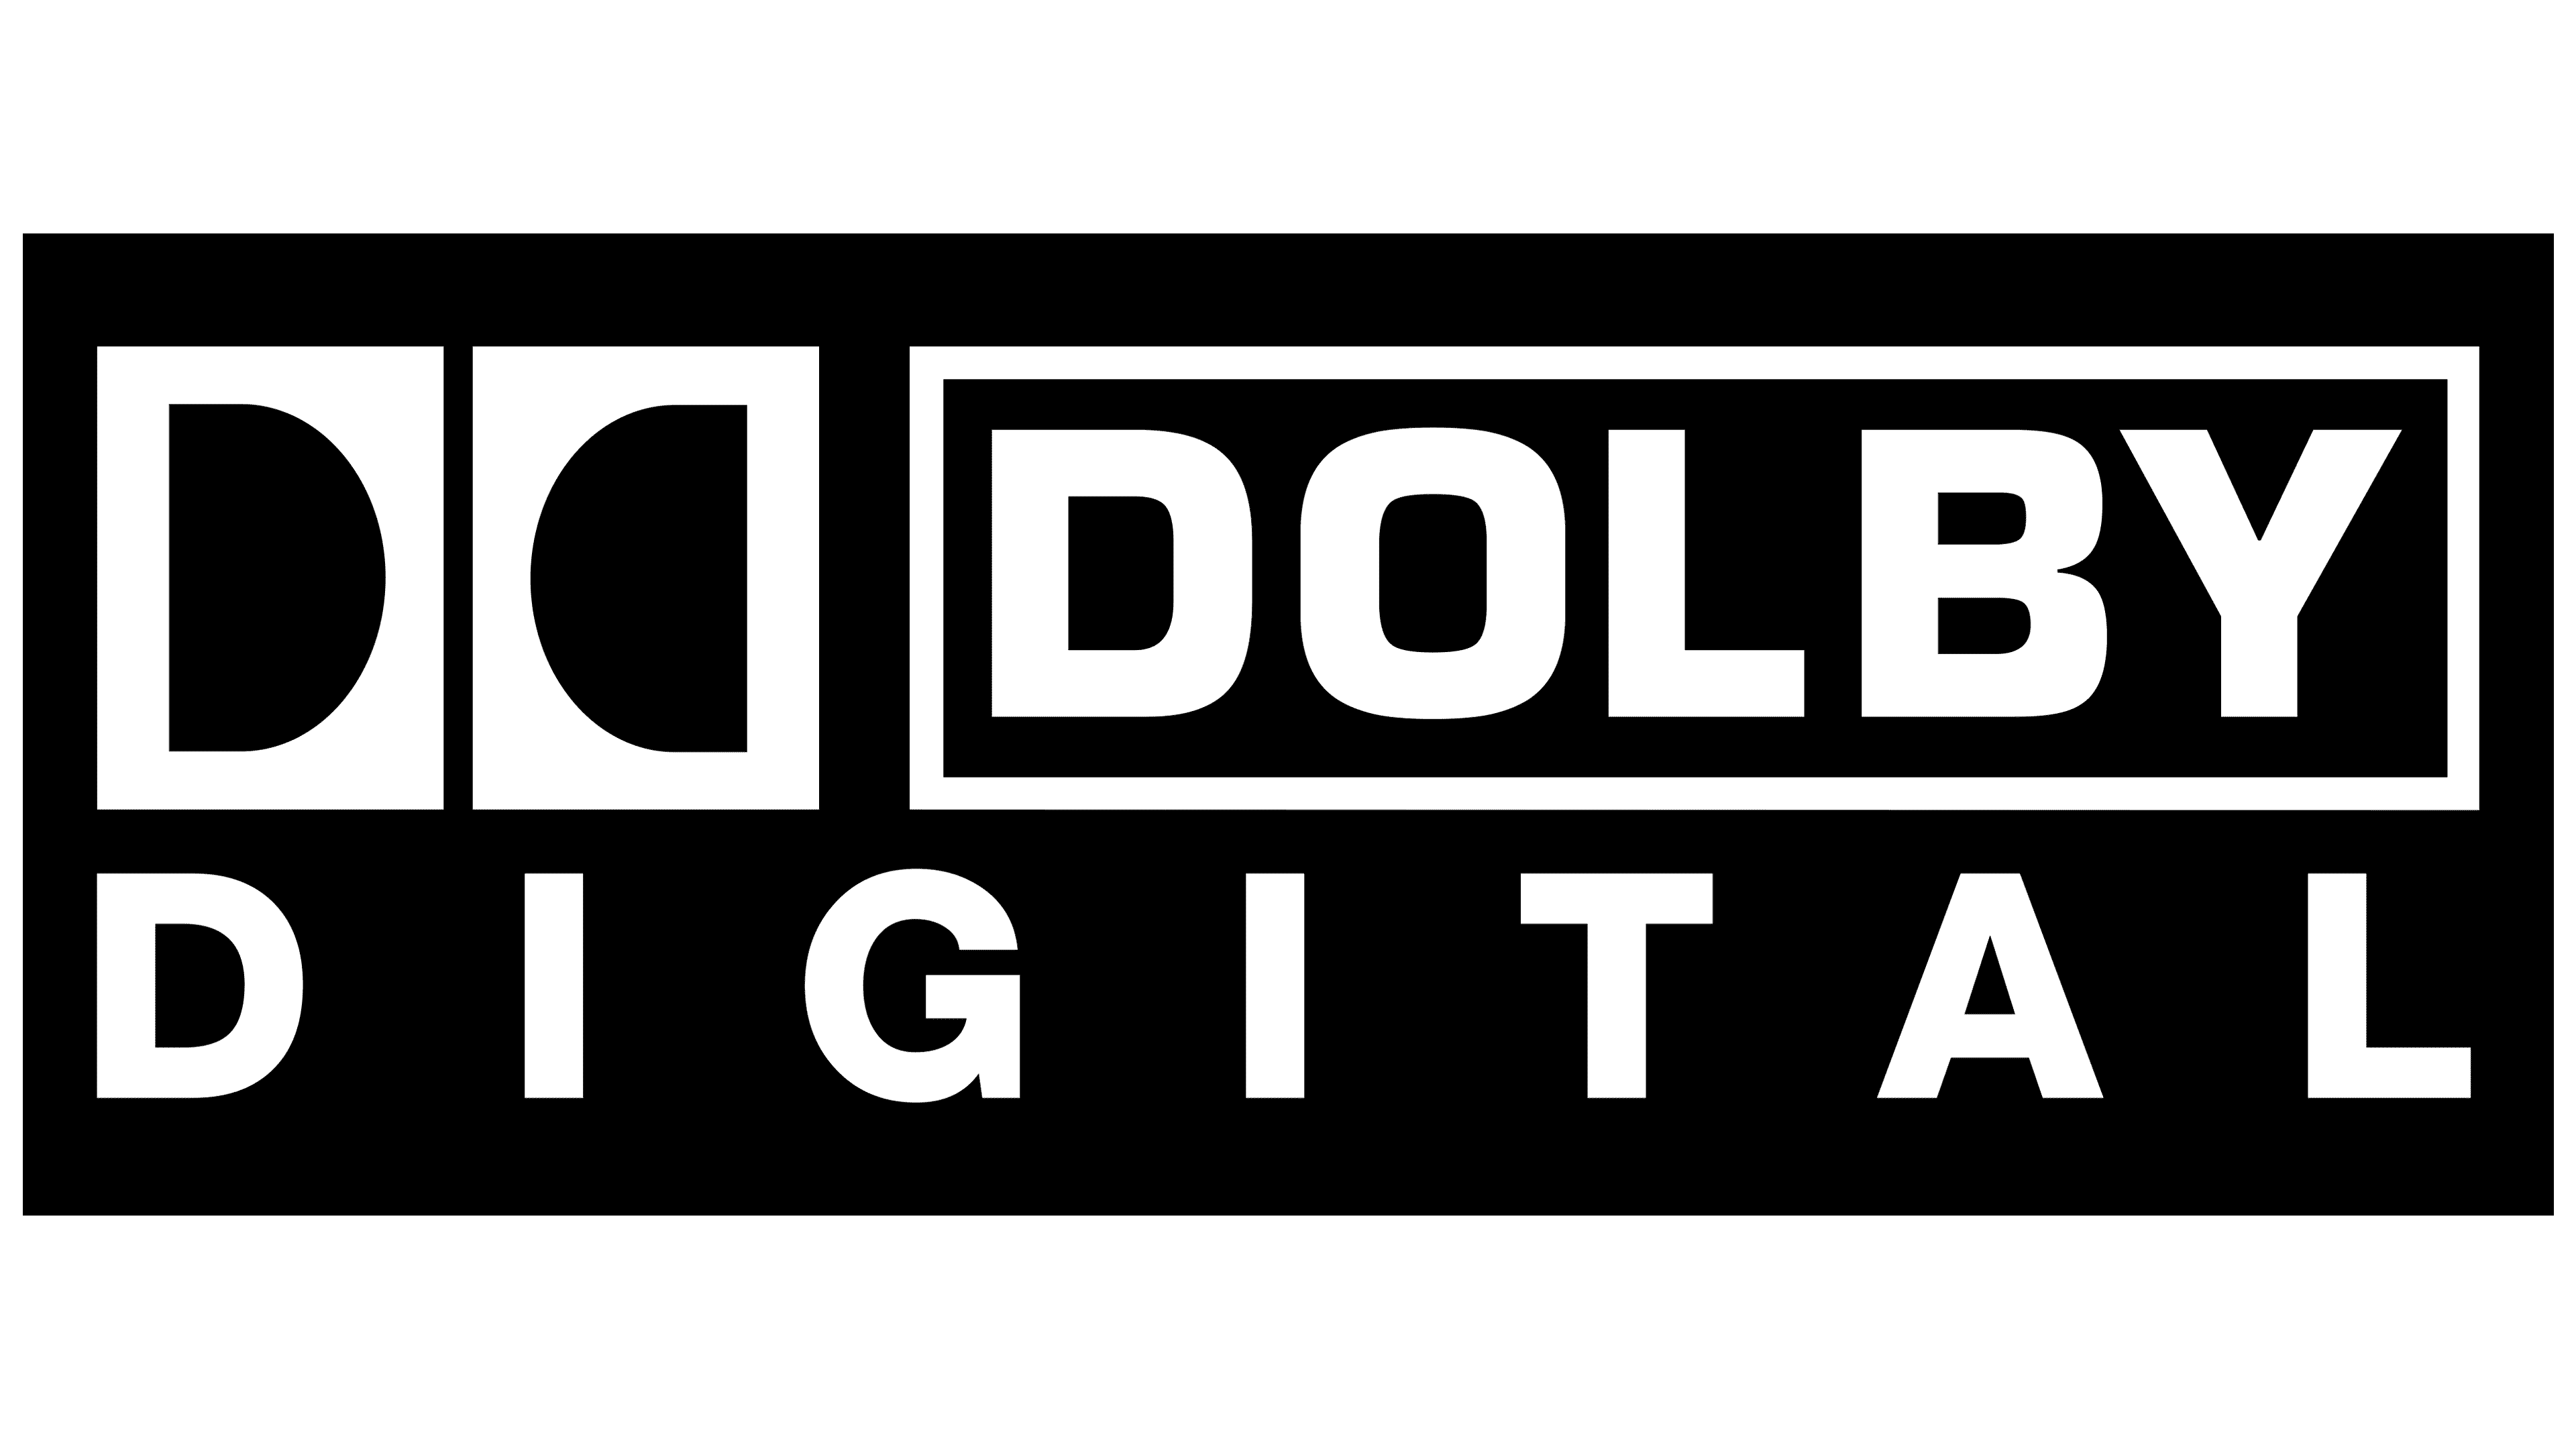 dolby digital software